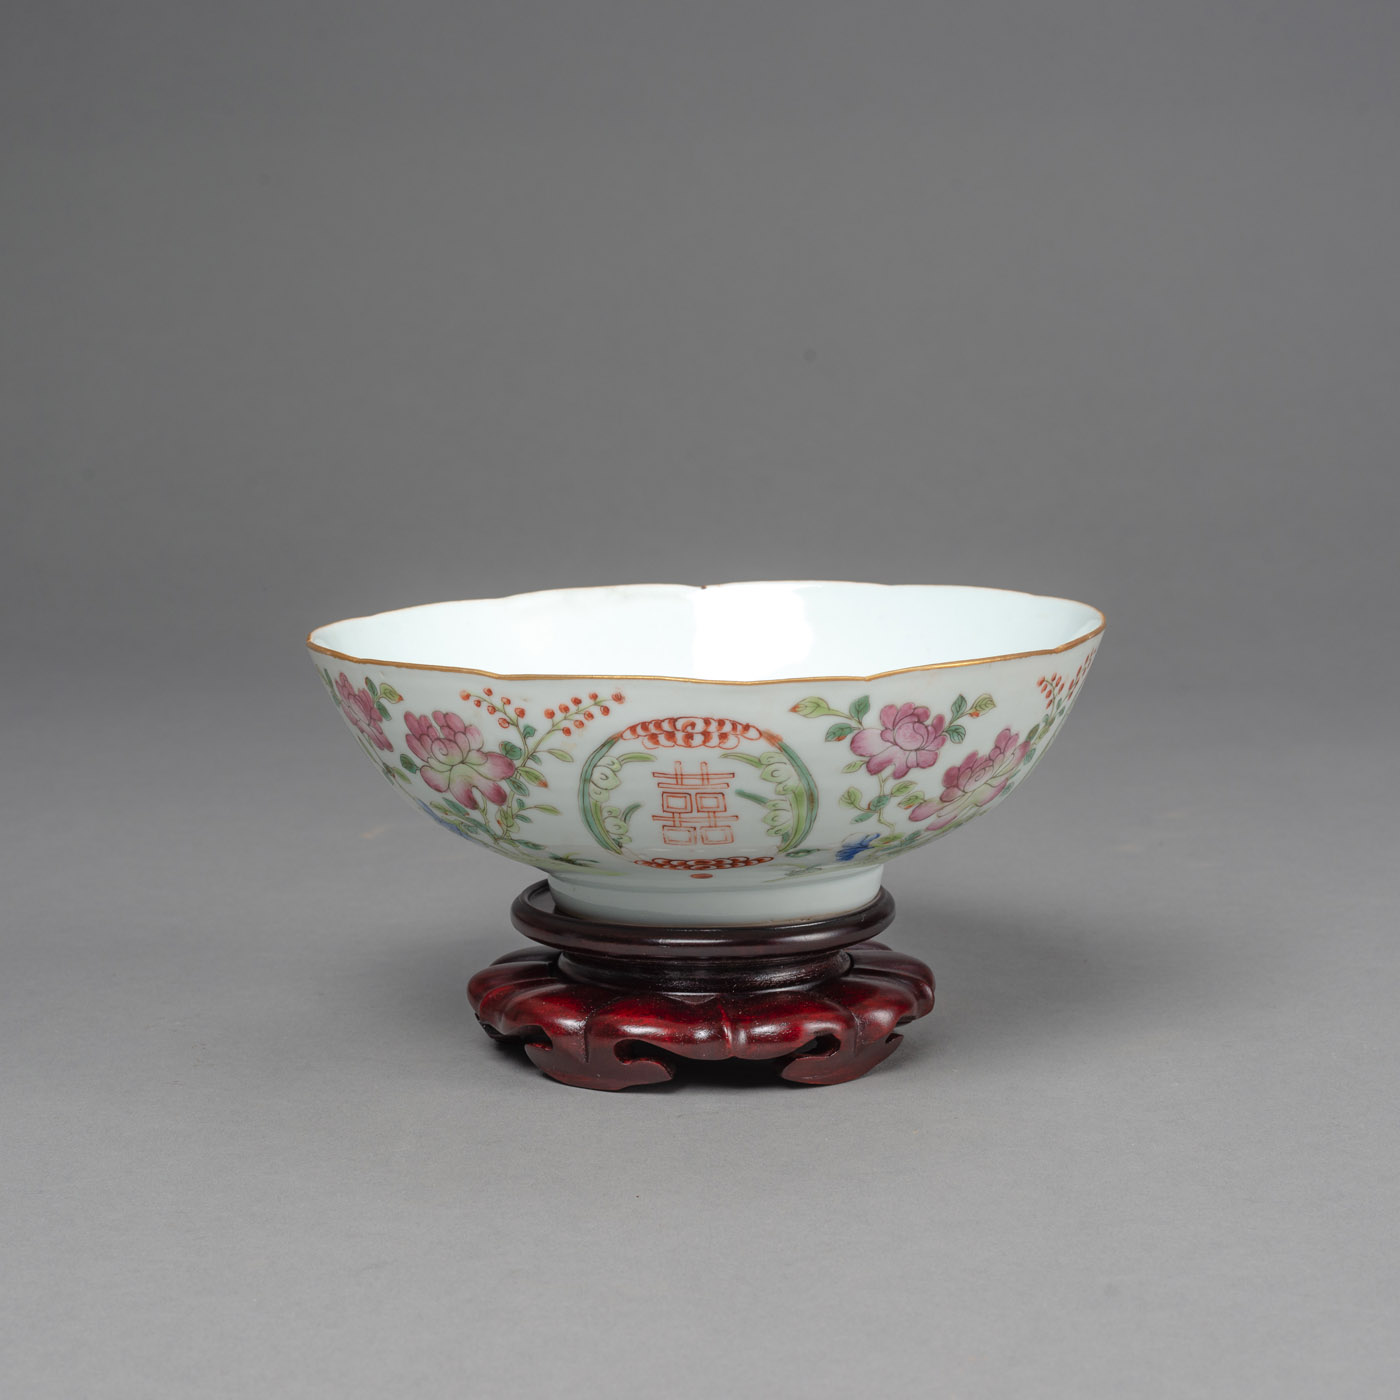 <b>Blütenförmige Porzellanschale mit 'Famille rose'-'Shuangxi'- und Floraldekor</b>